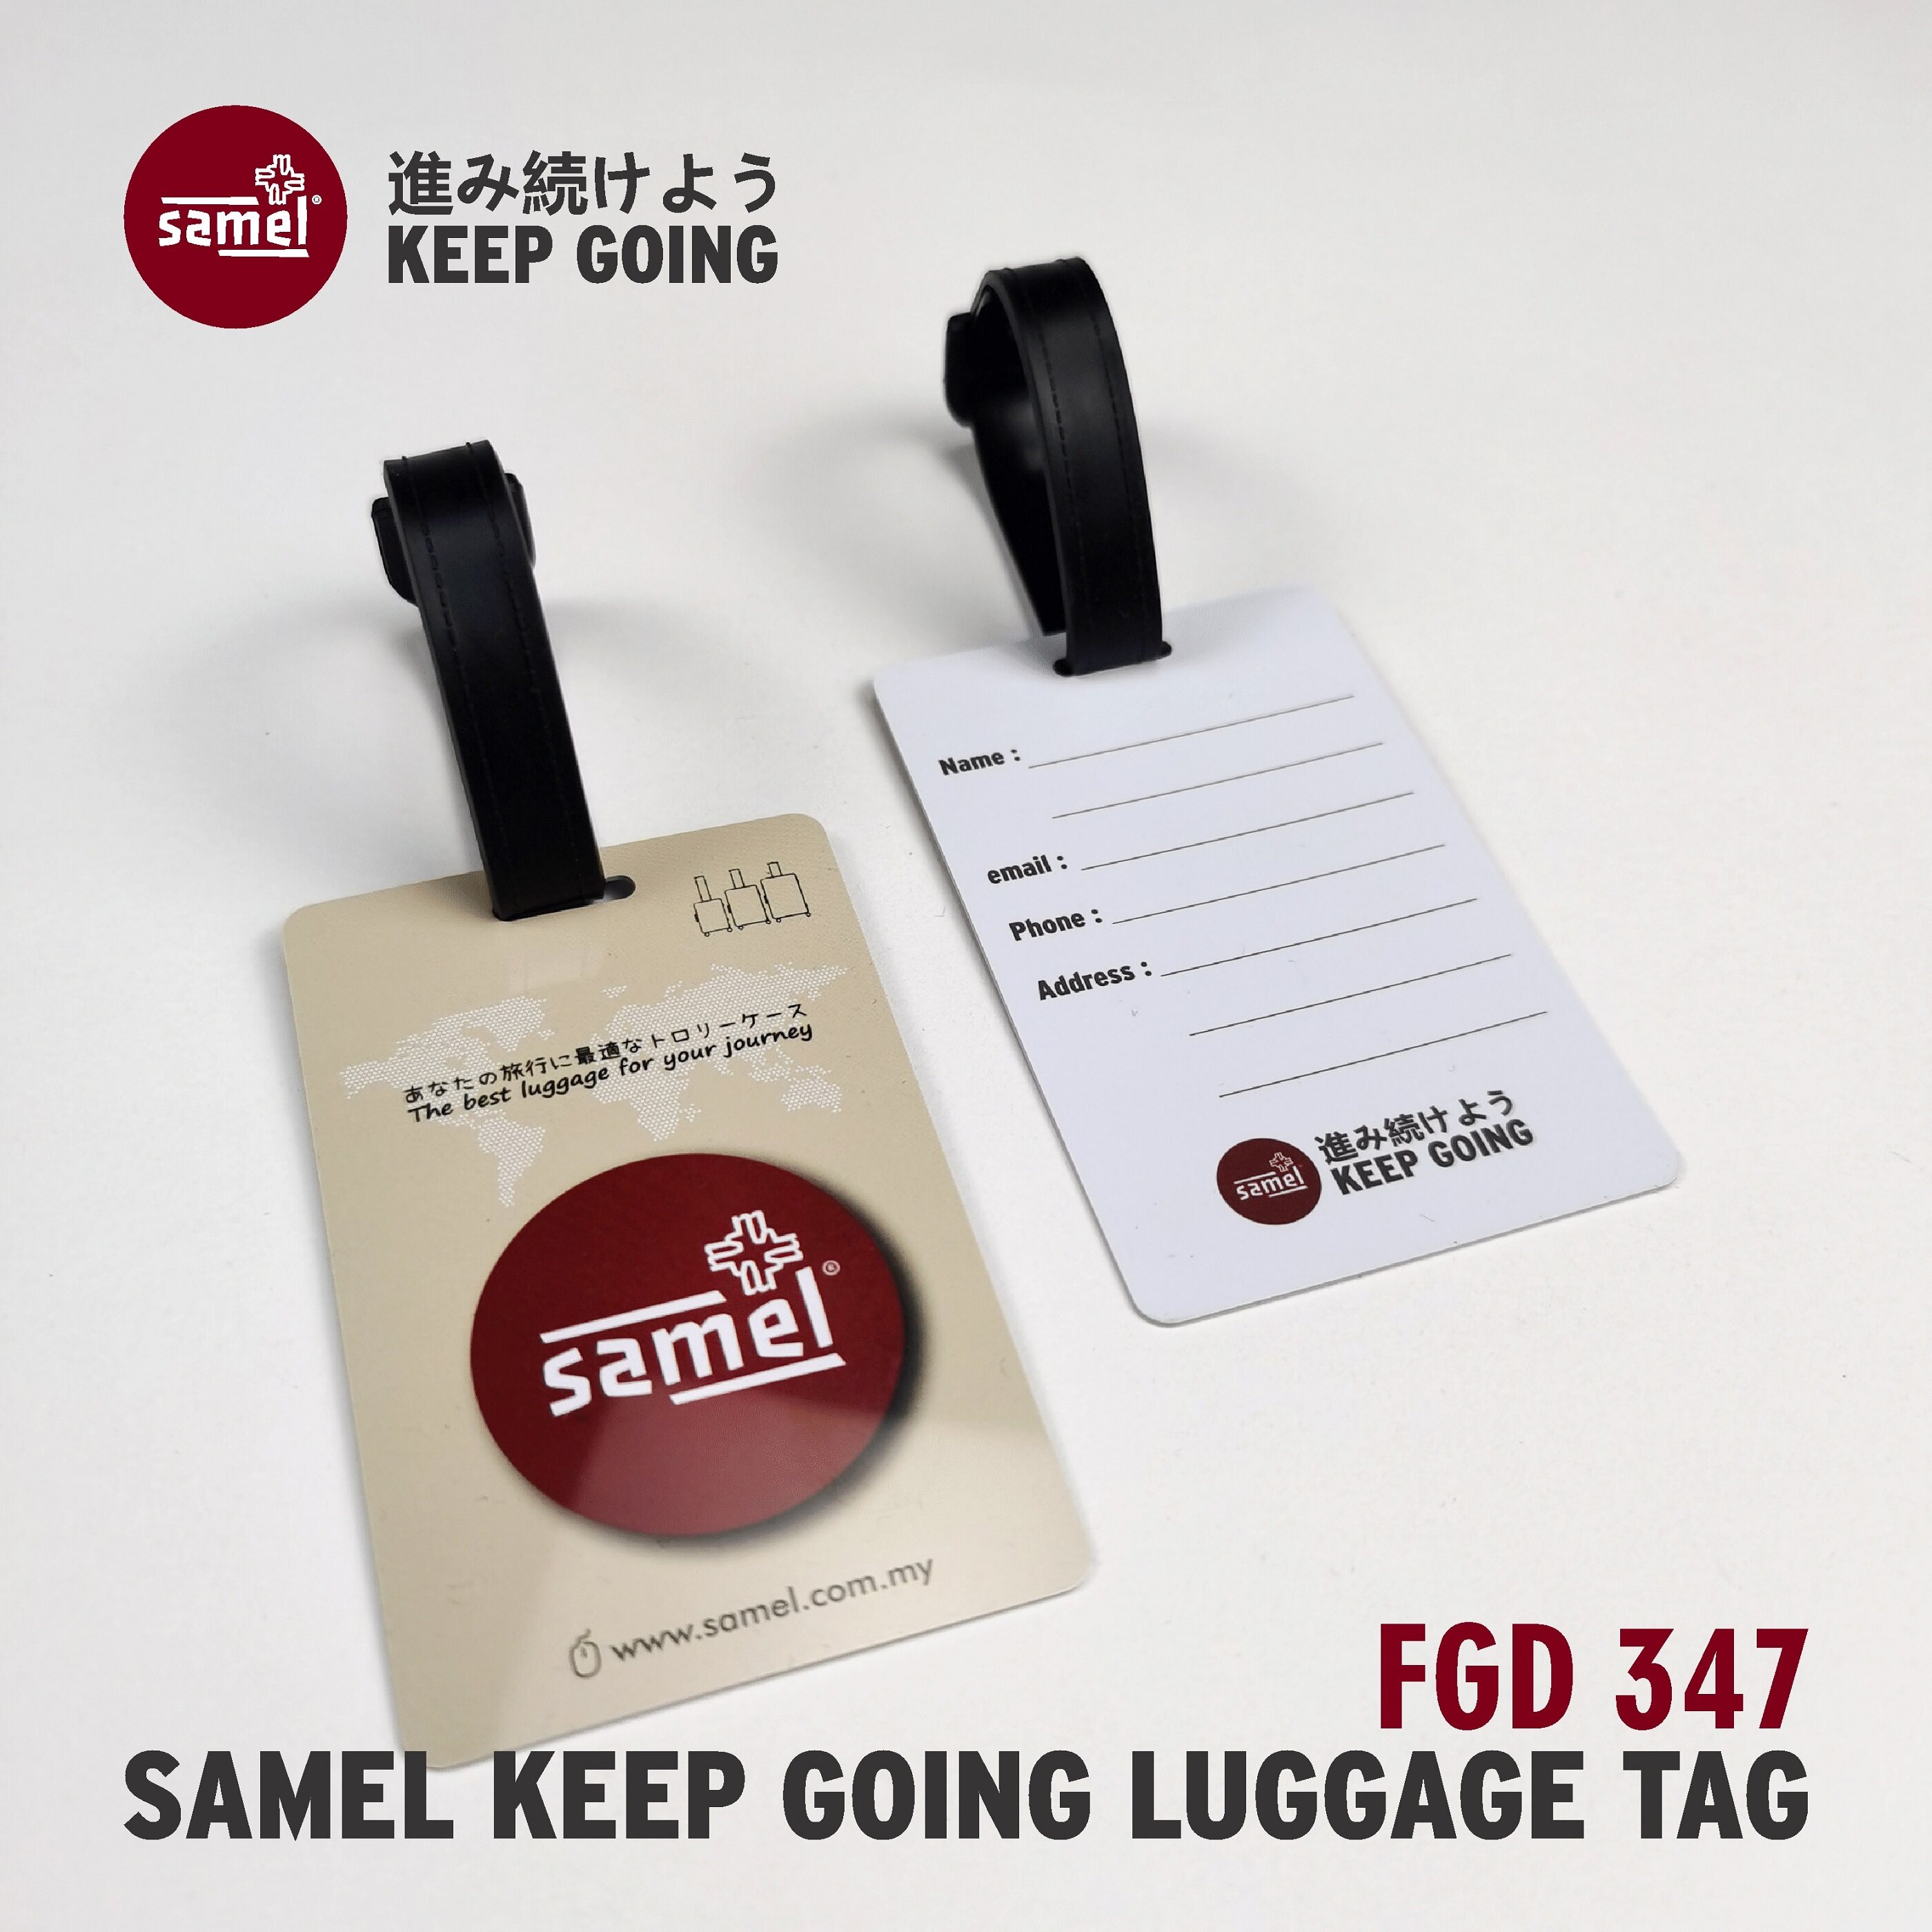 FGD 347 SAMEL KEEP GOING LUGGAGE TAG